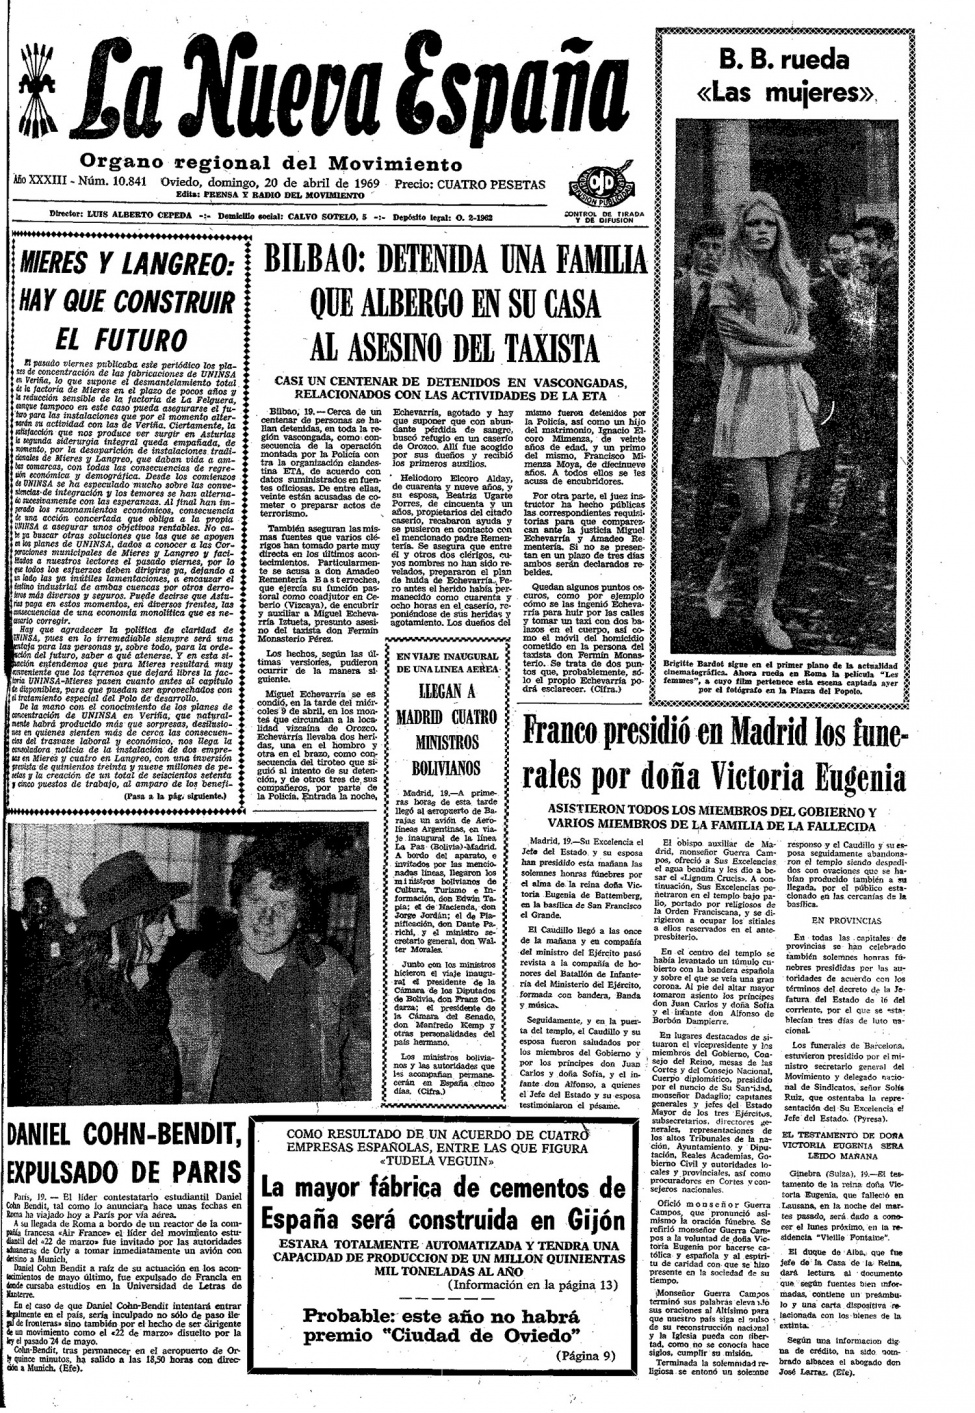 Portada del Domingo, 20 de Abril de 1969